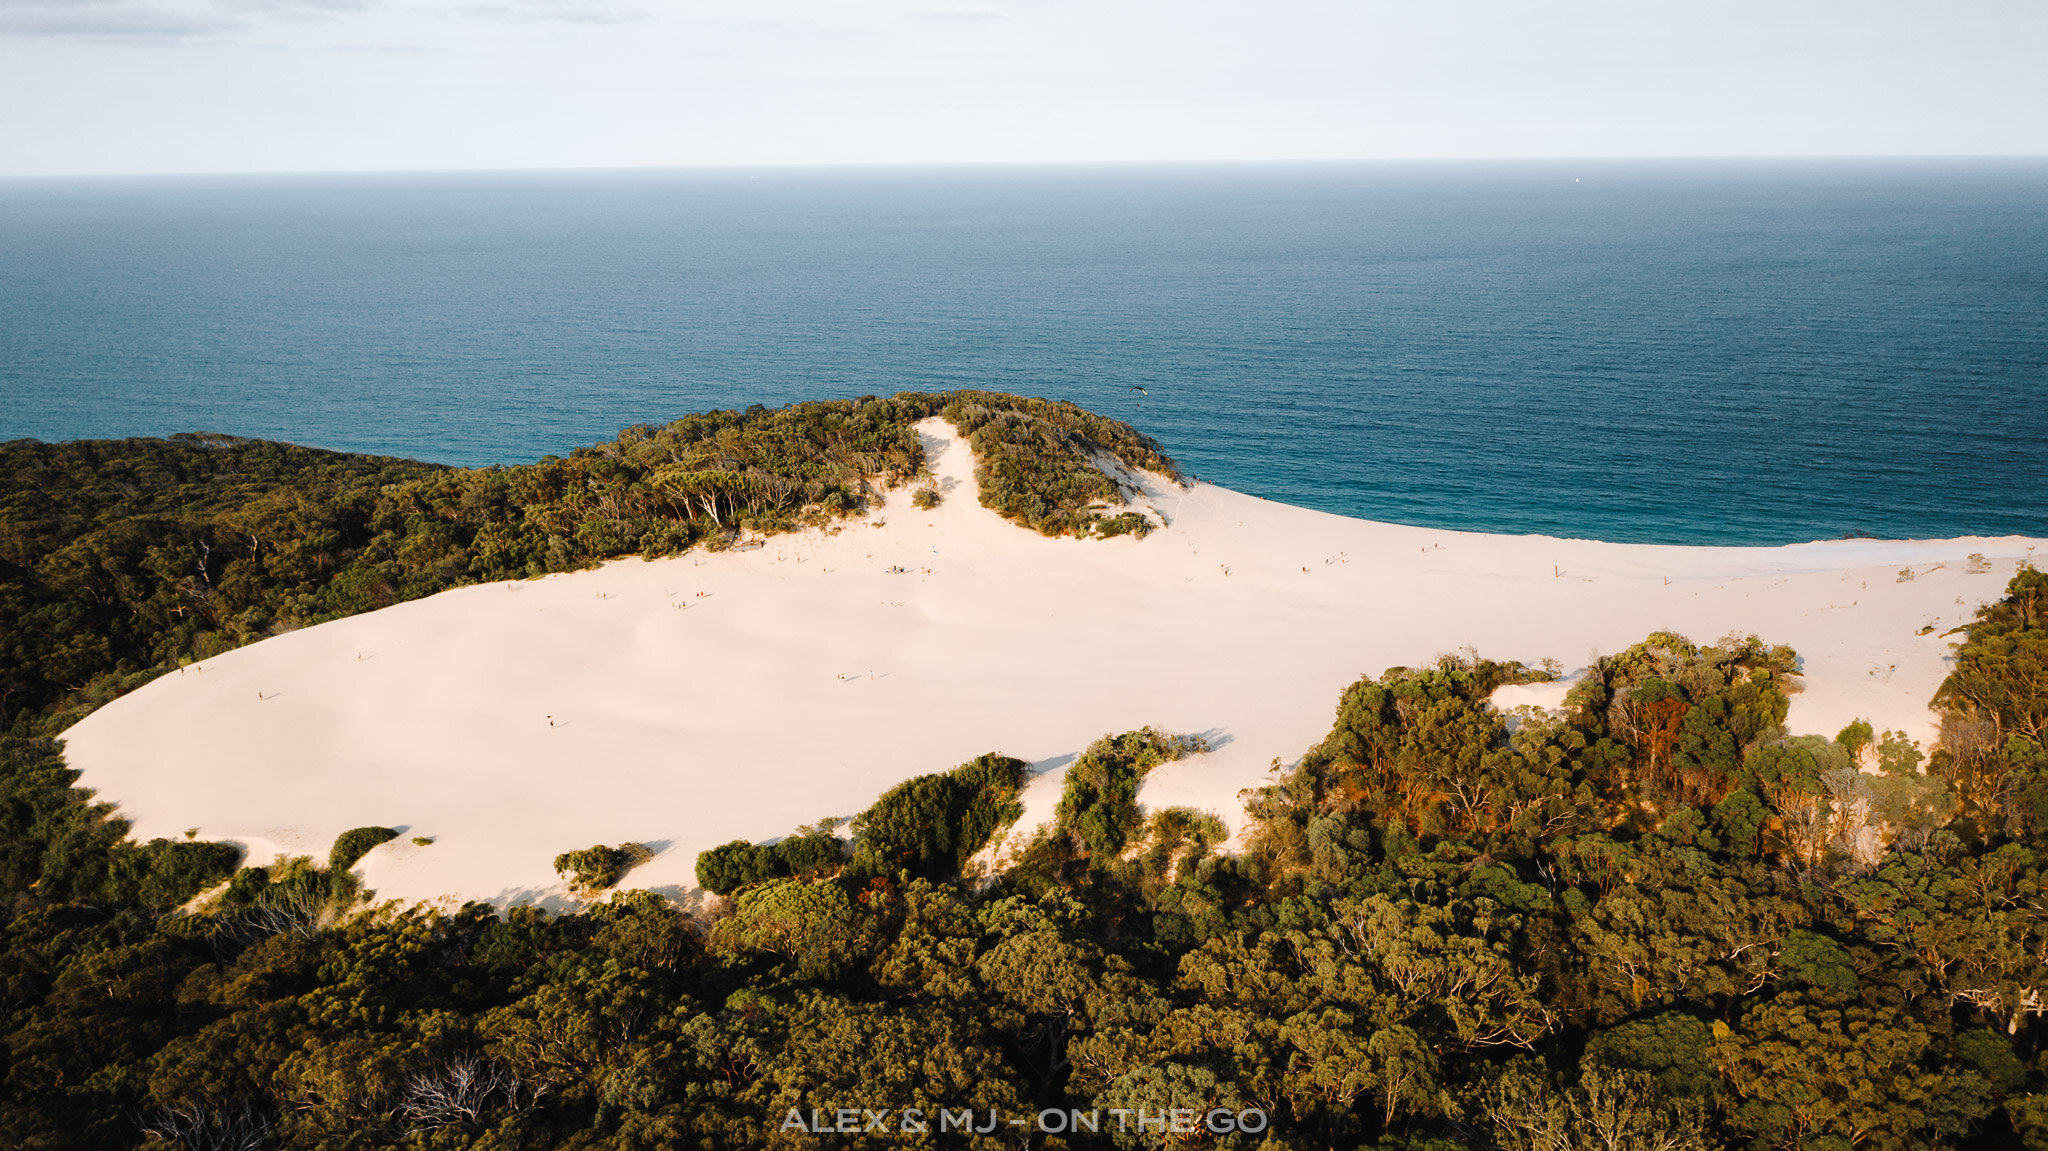 Alex-MJ-On-the-GO-Australie-Fraser-coast-carlos-sand-blow-dunes-entre-les-arbres.jpg